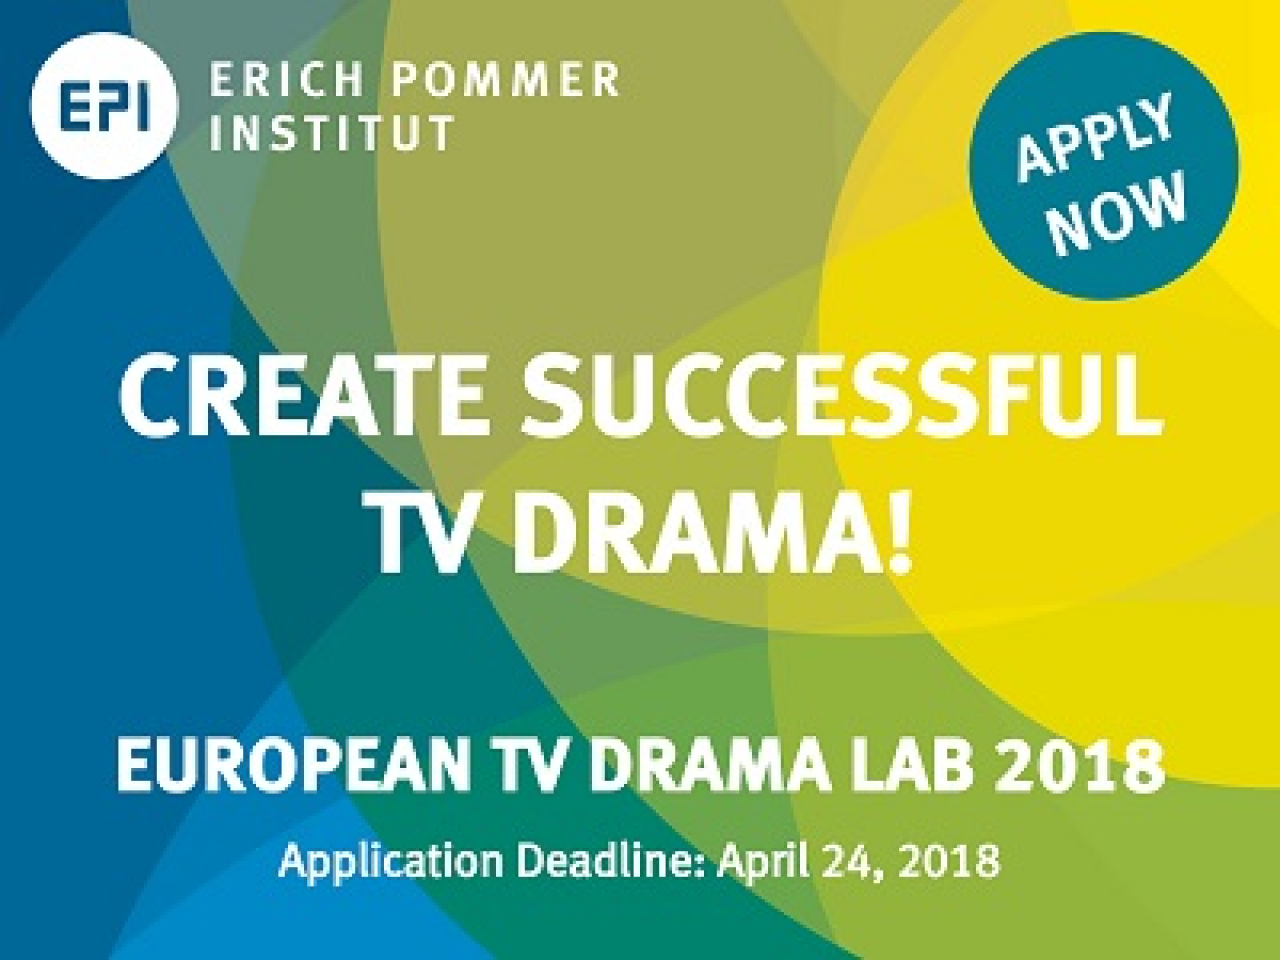 EPI European TV Drama Lab 2018